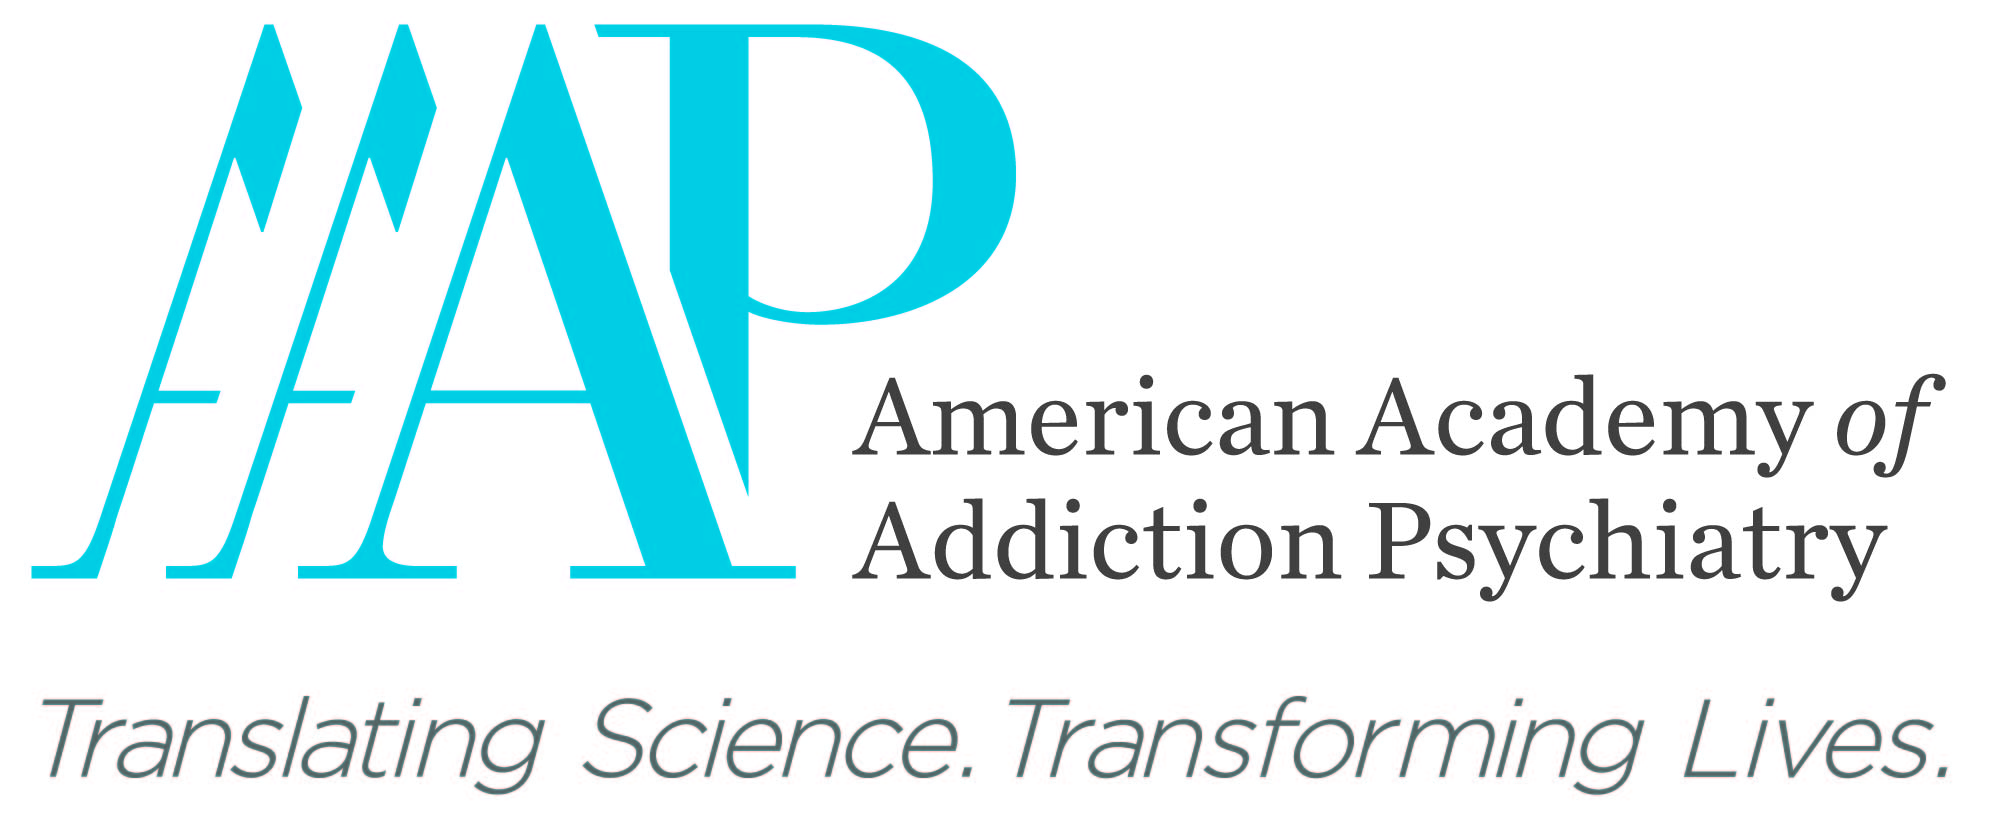 American Academy of Addiction Psychiatry Logo